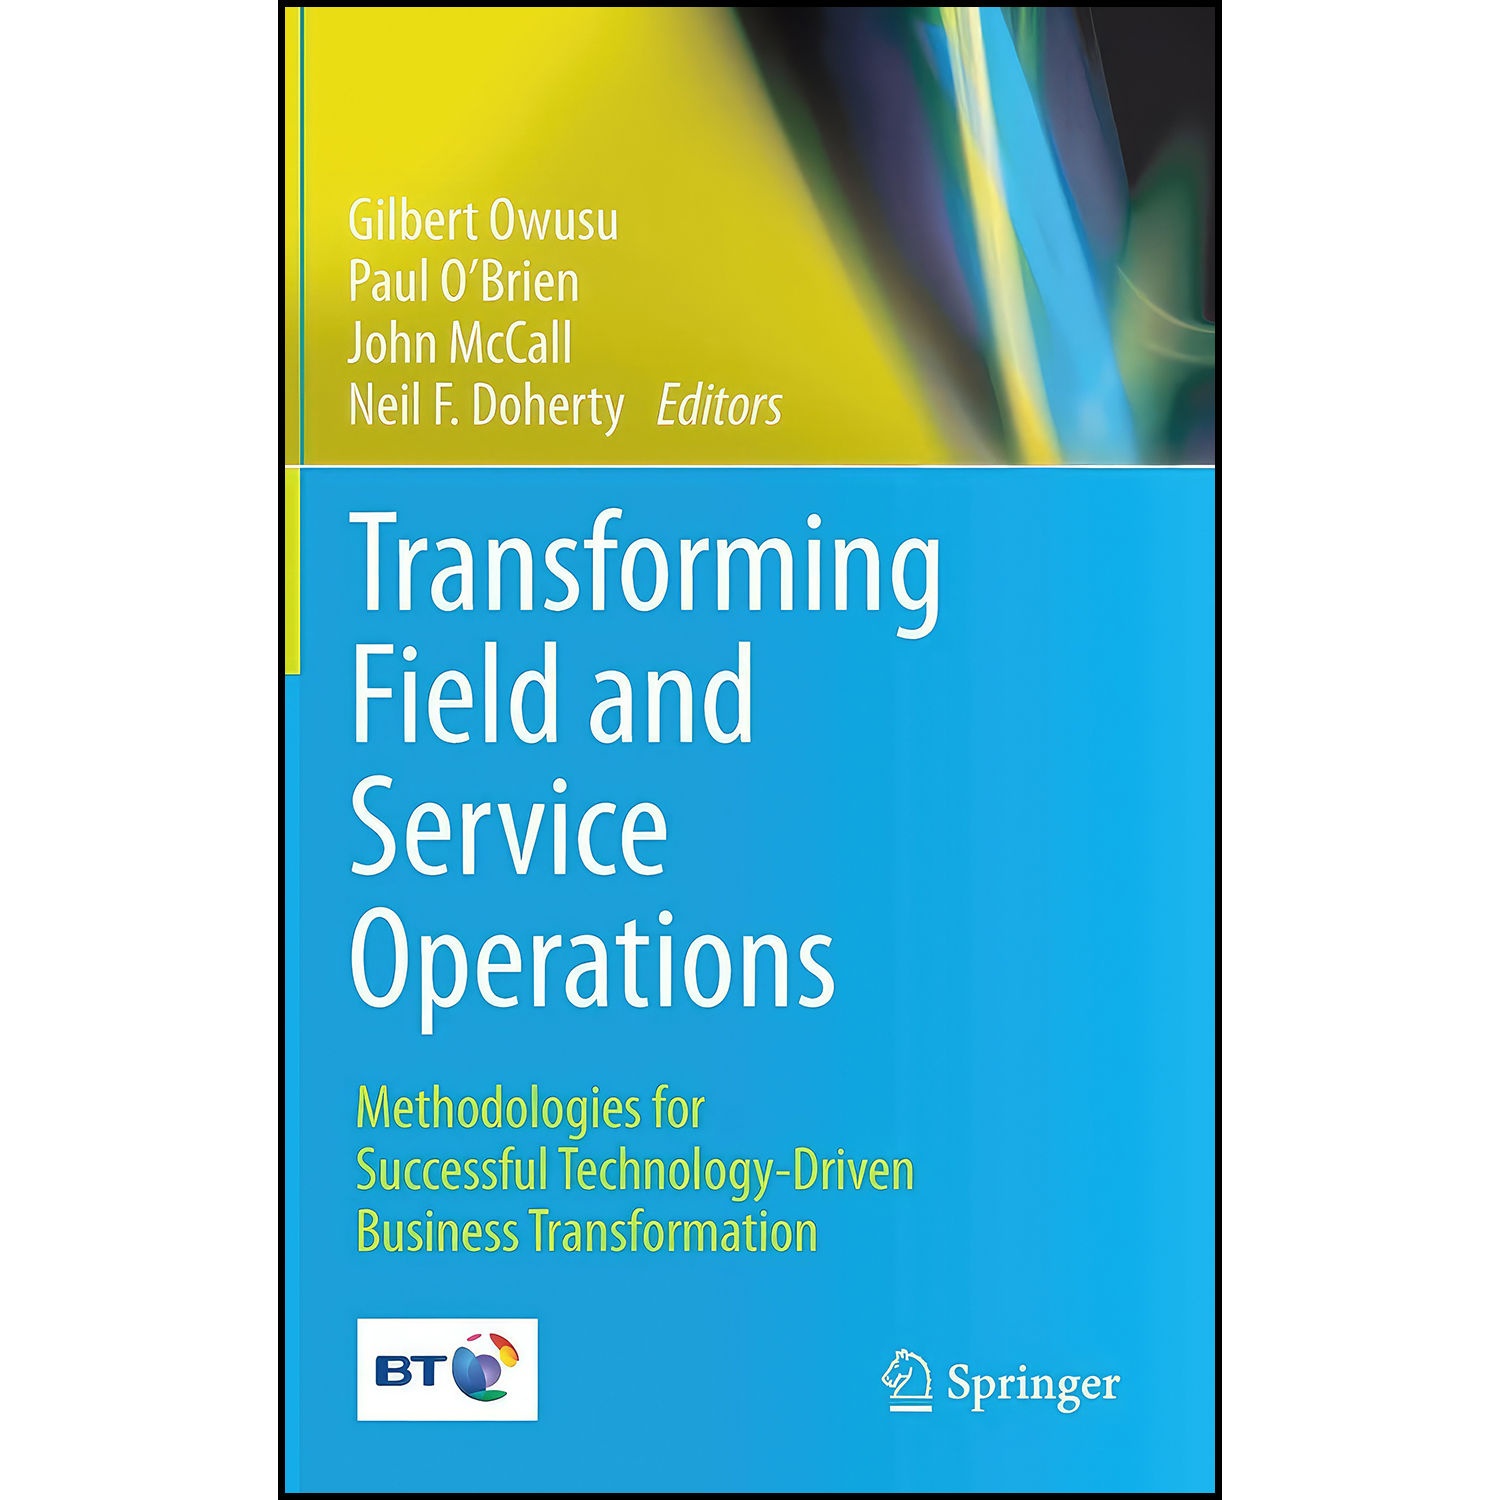 کتاب Transforming Field and Service Operations اثر جمعي از نويسندگان انتشارات Springer